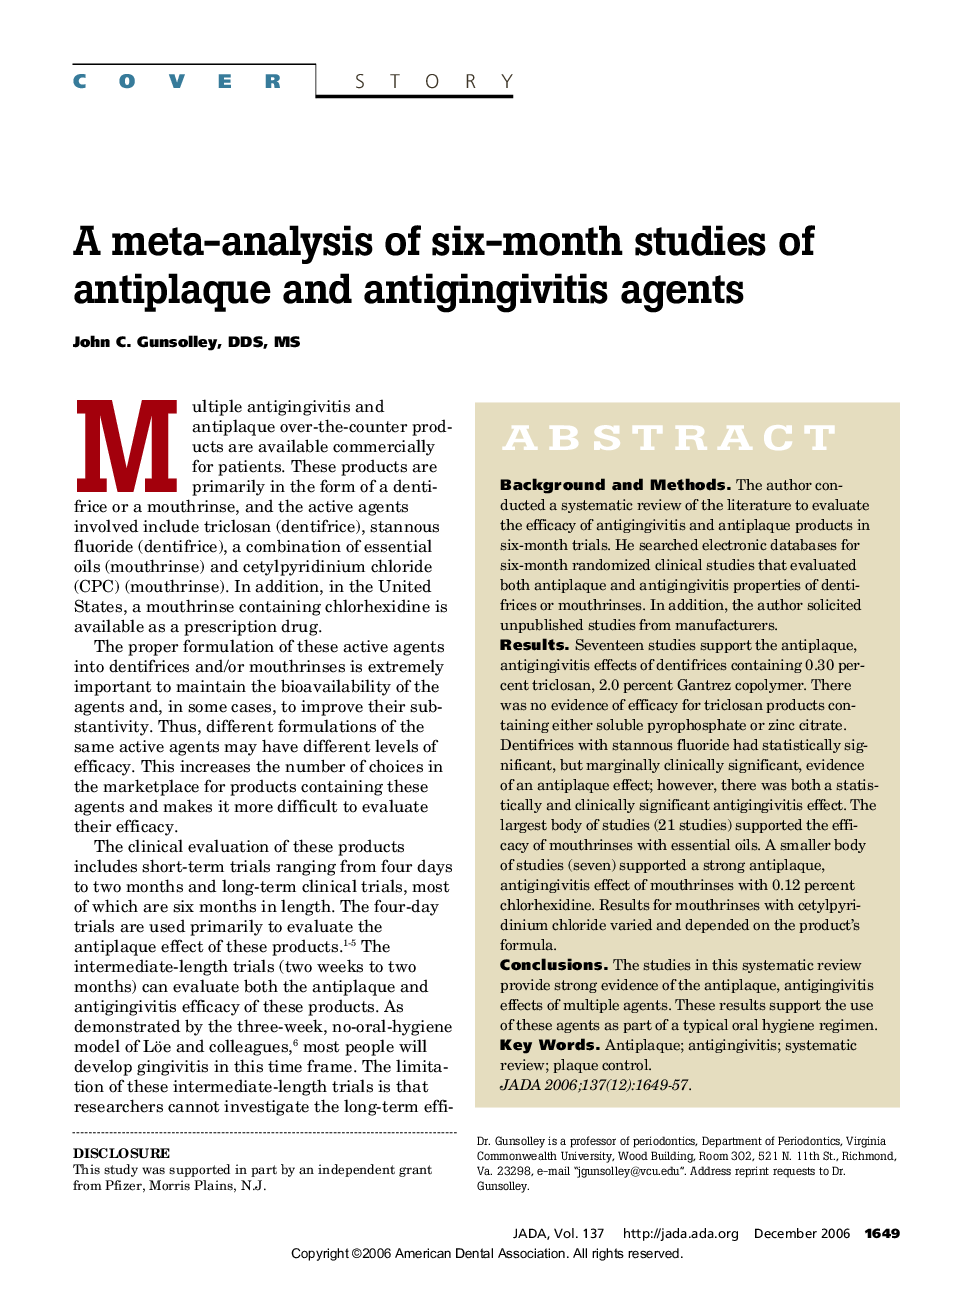 A meta-analysis of six-month studies of antiplaque and antigingivitis agents 